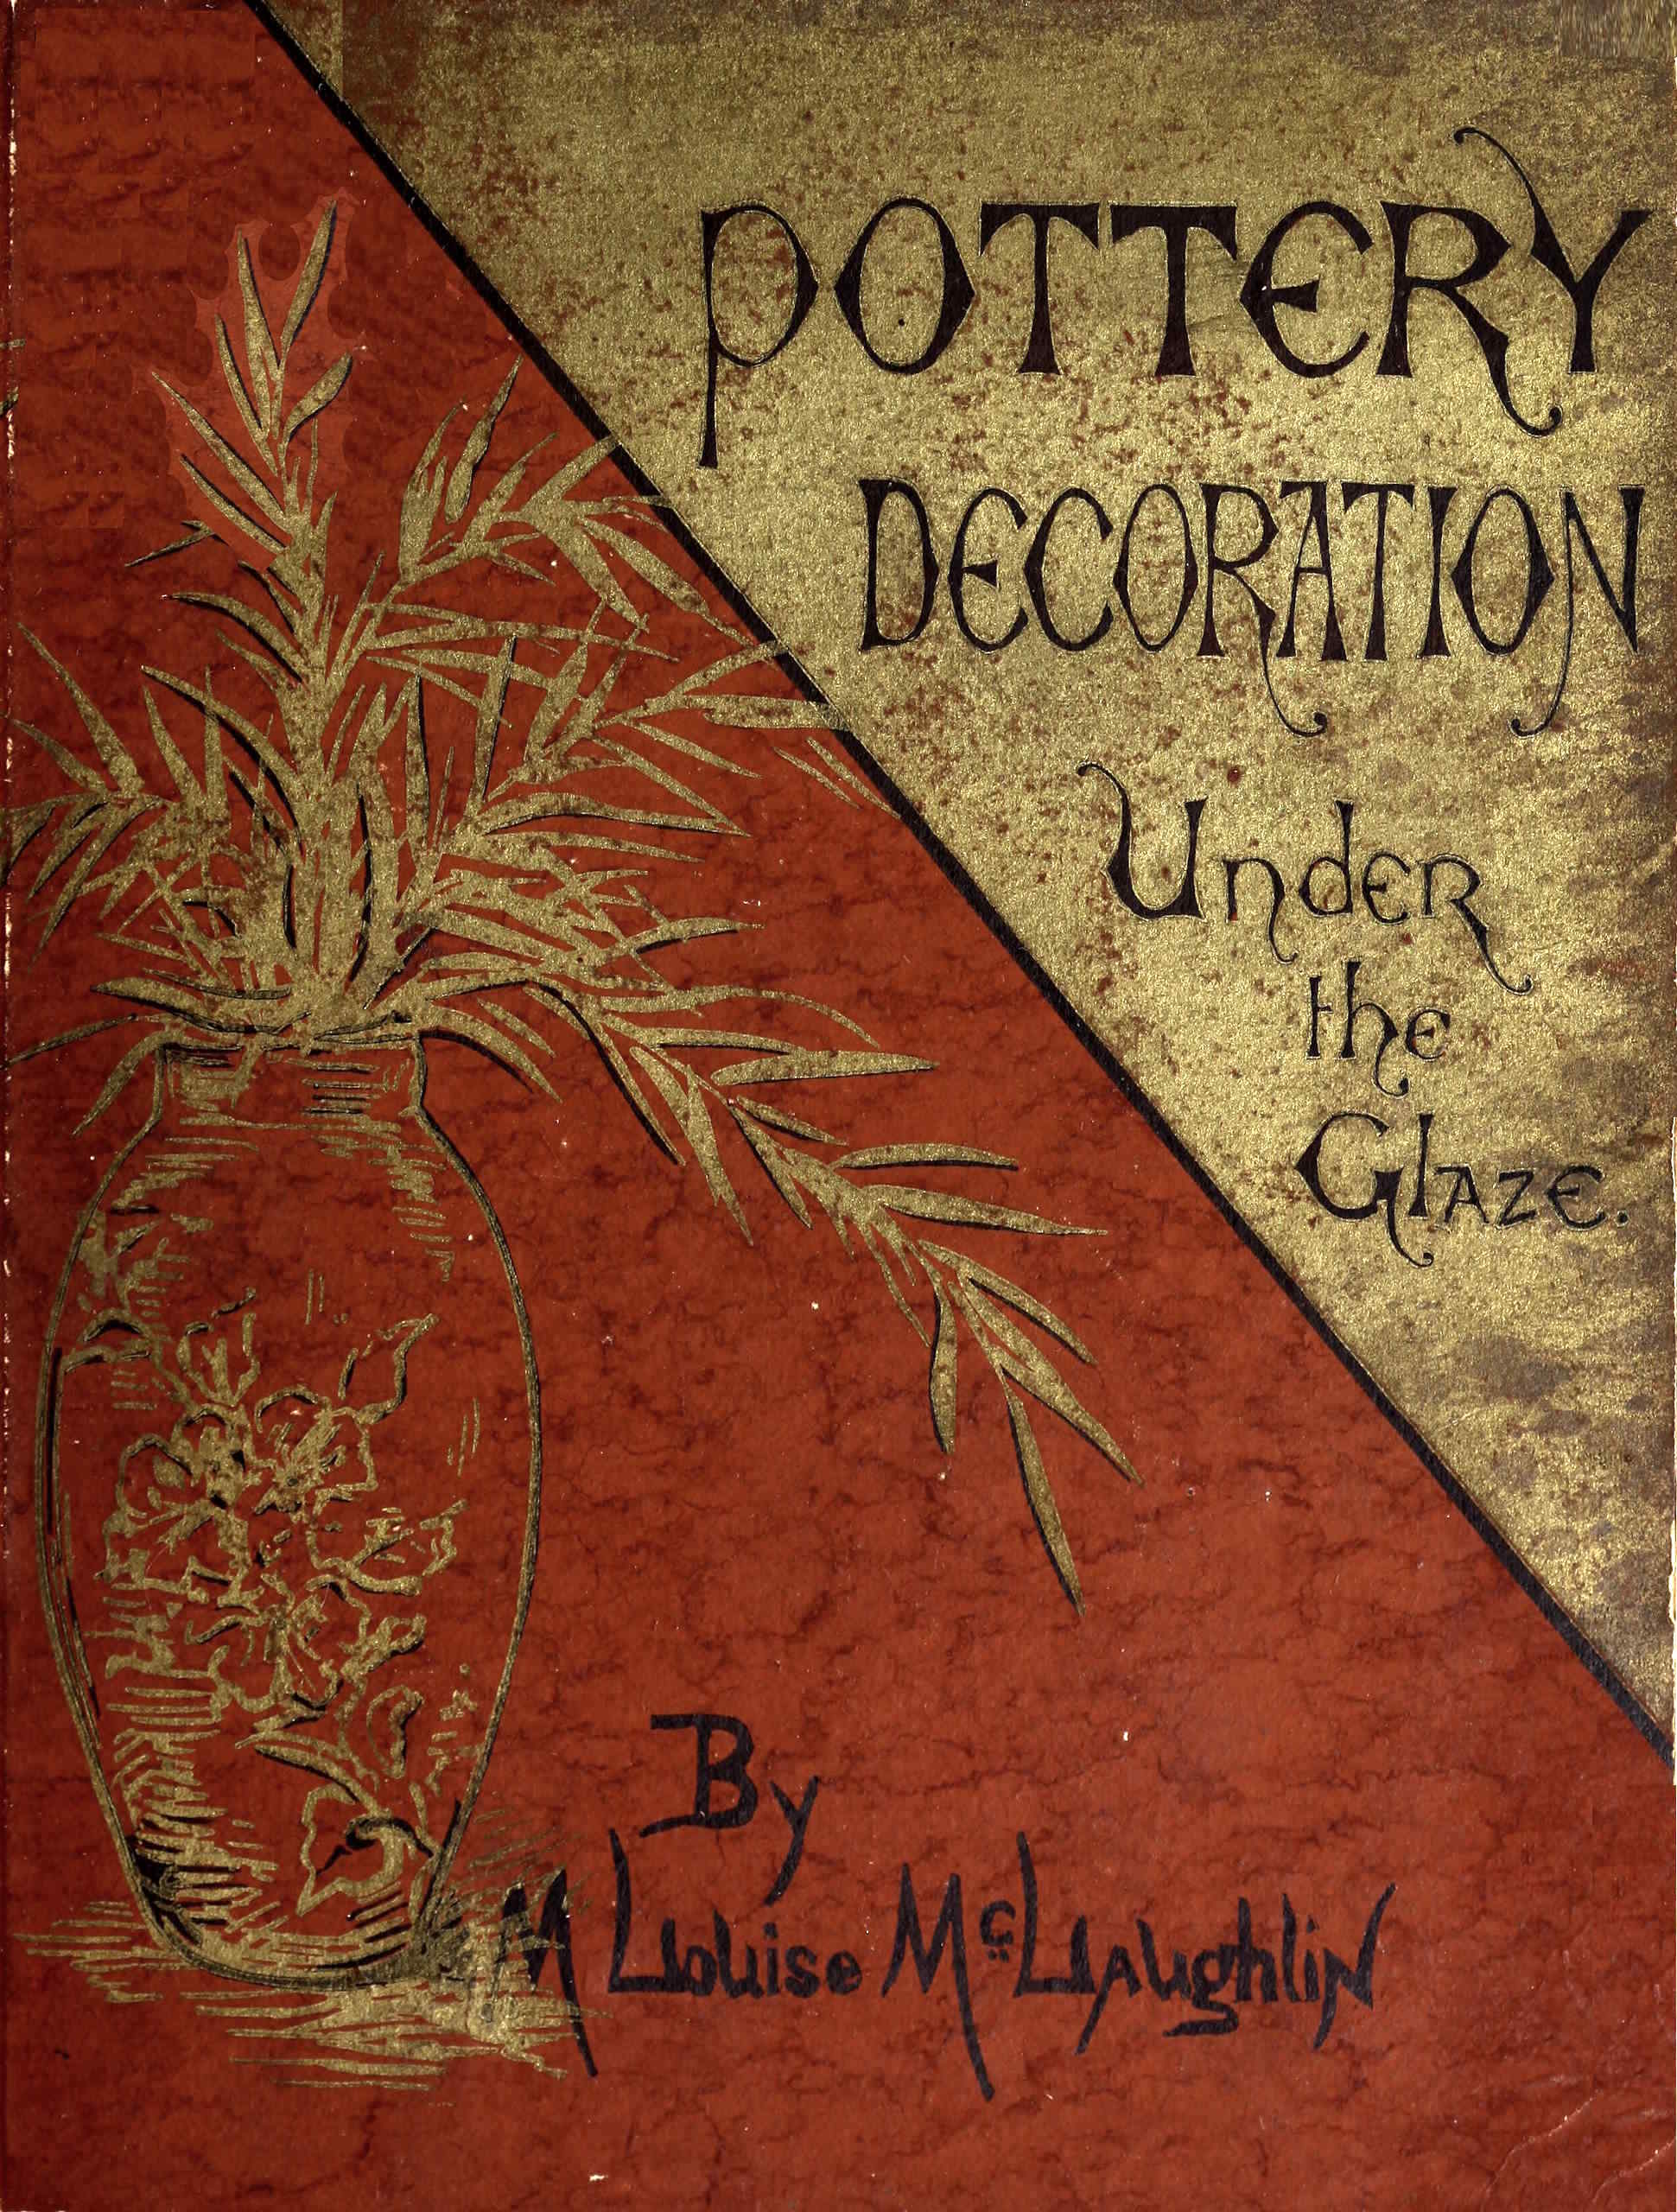 Underglaze Recipe for Colorful Pottery Decoration